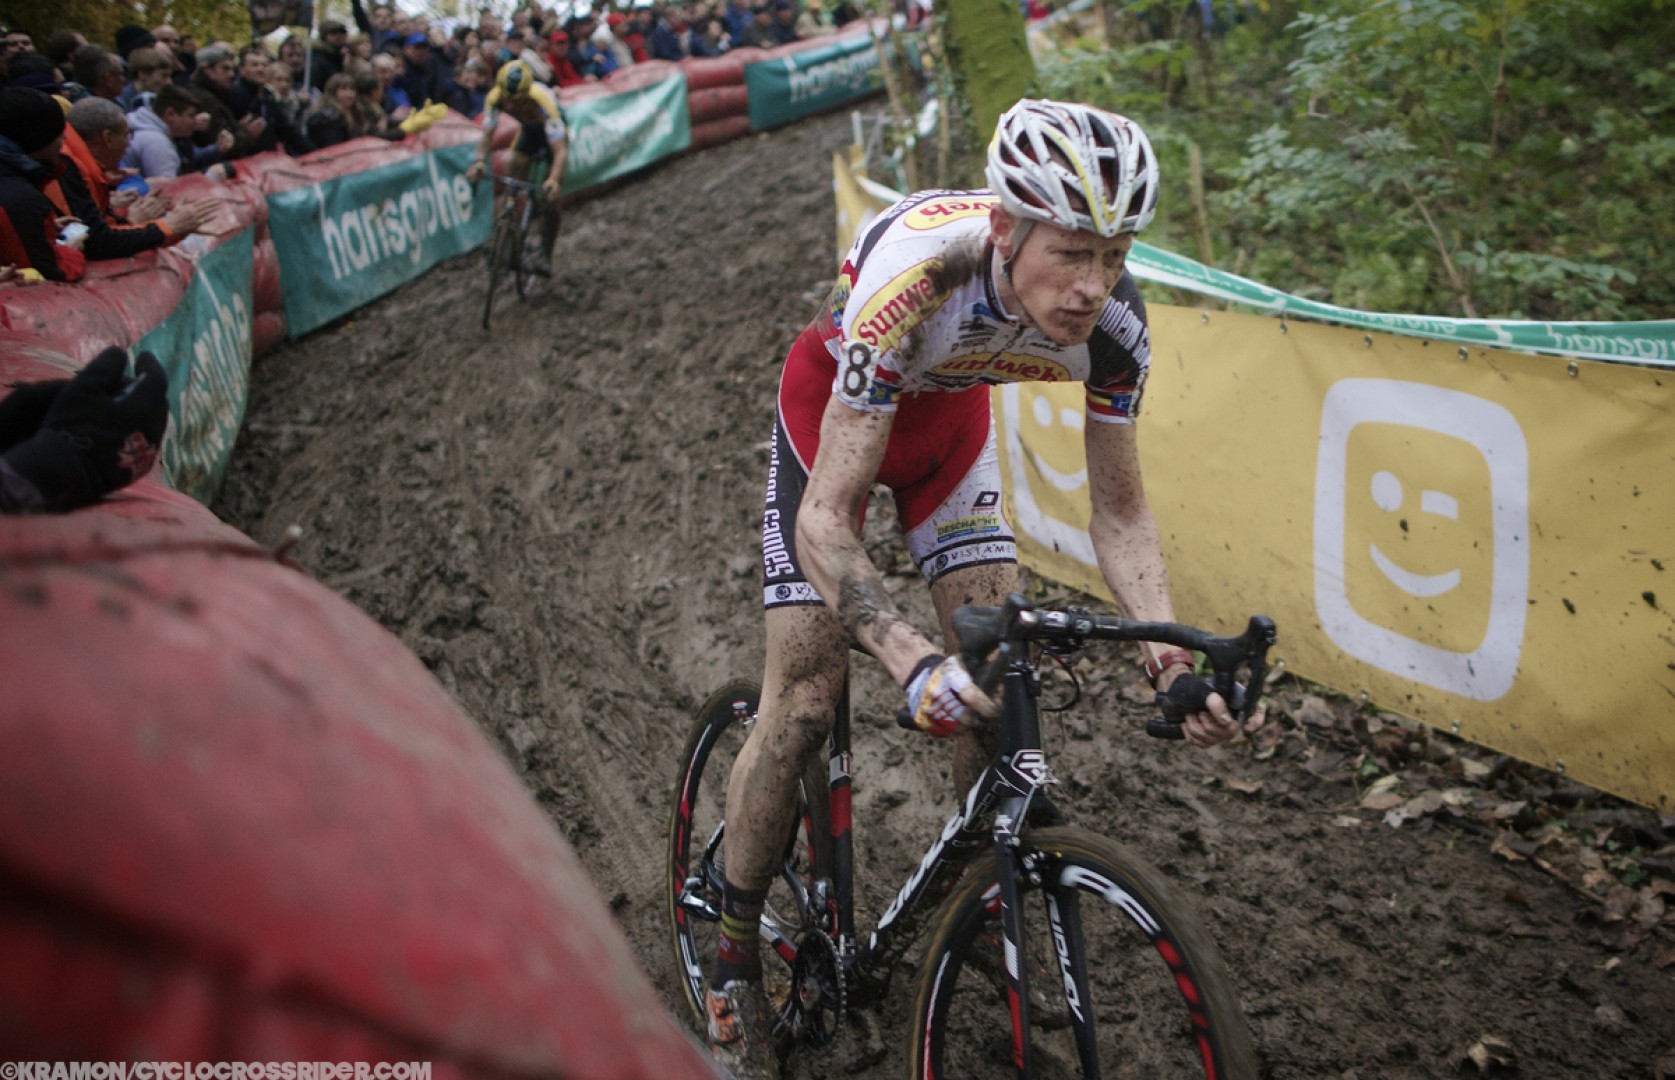 GAVERE: Vantornout's best win since his Belgian title - Cyclocrossrider